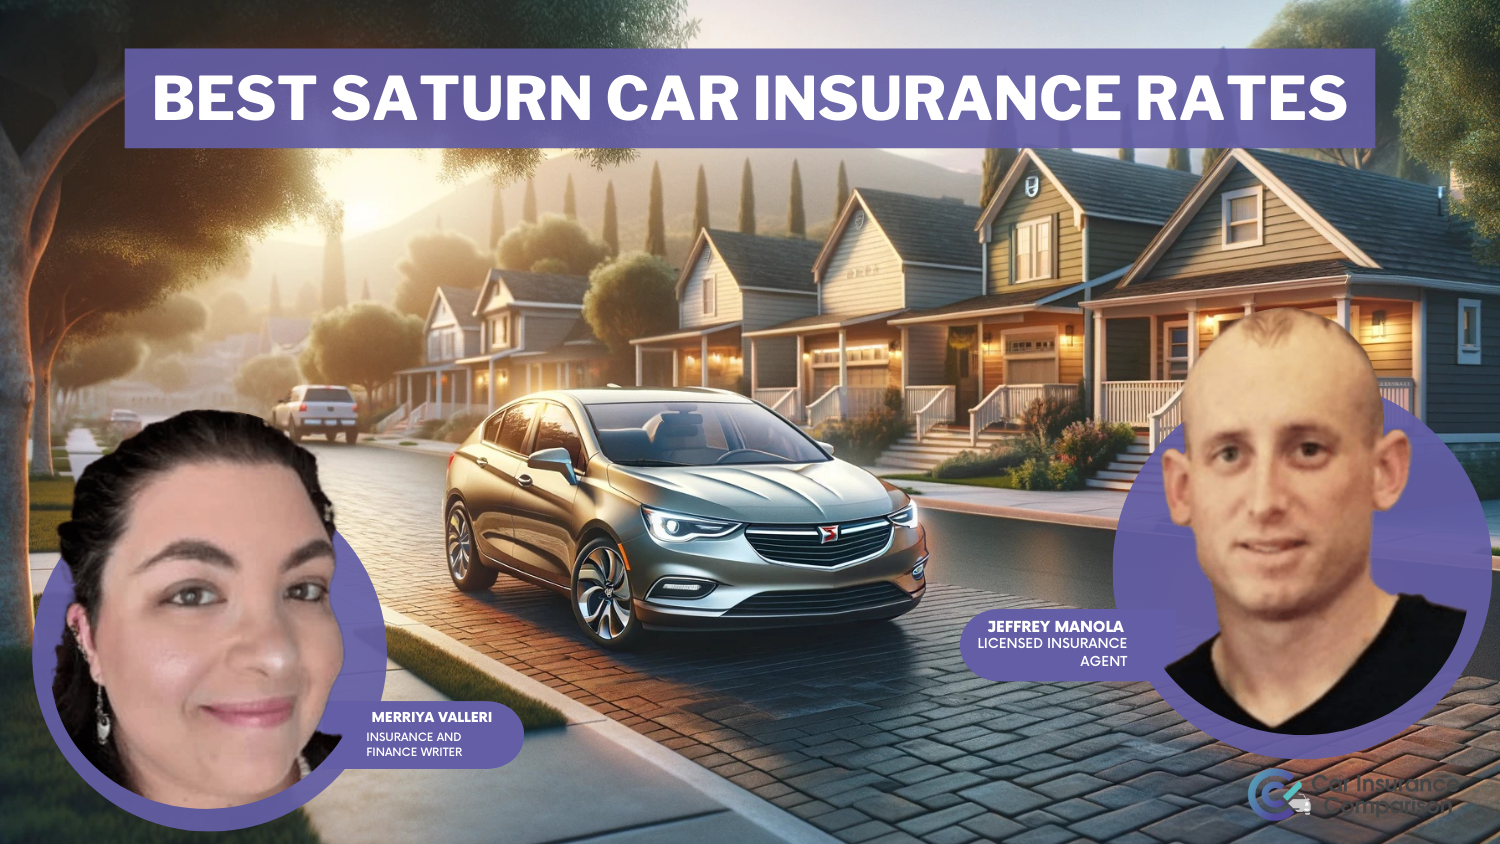 Best Saturn Car Insurance Rates: Progressive, State Farm, Geico